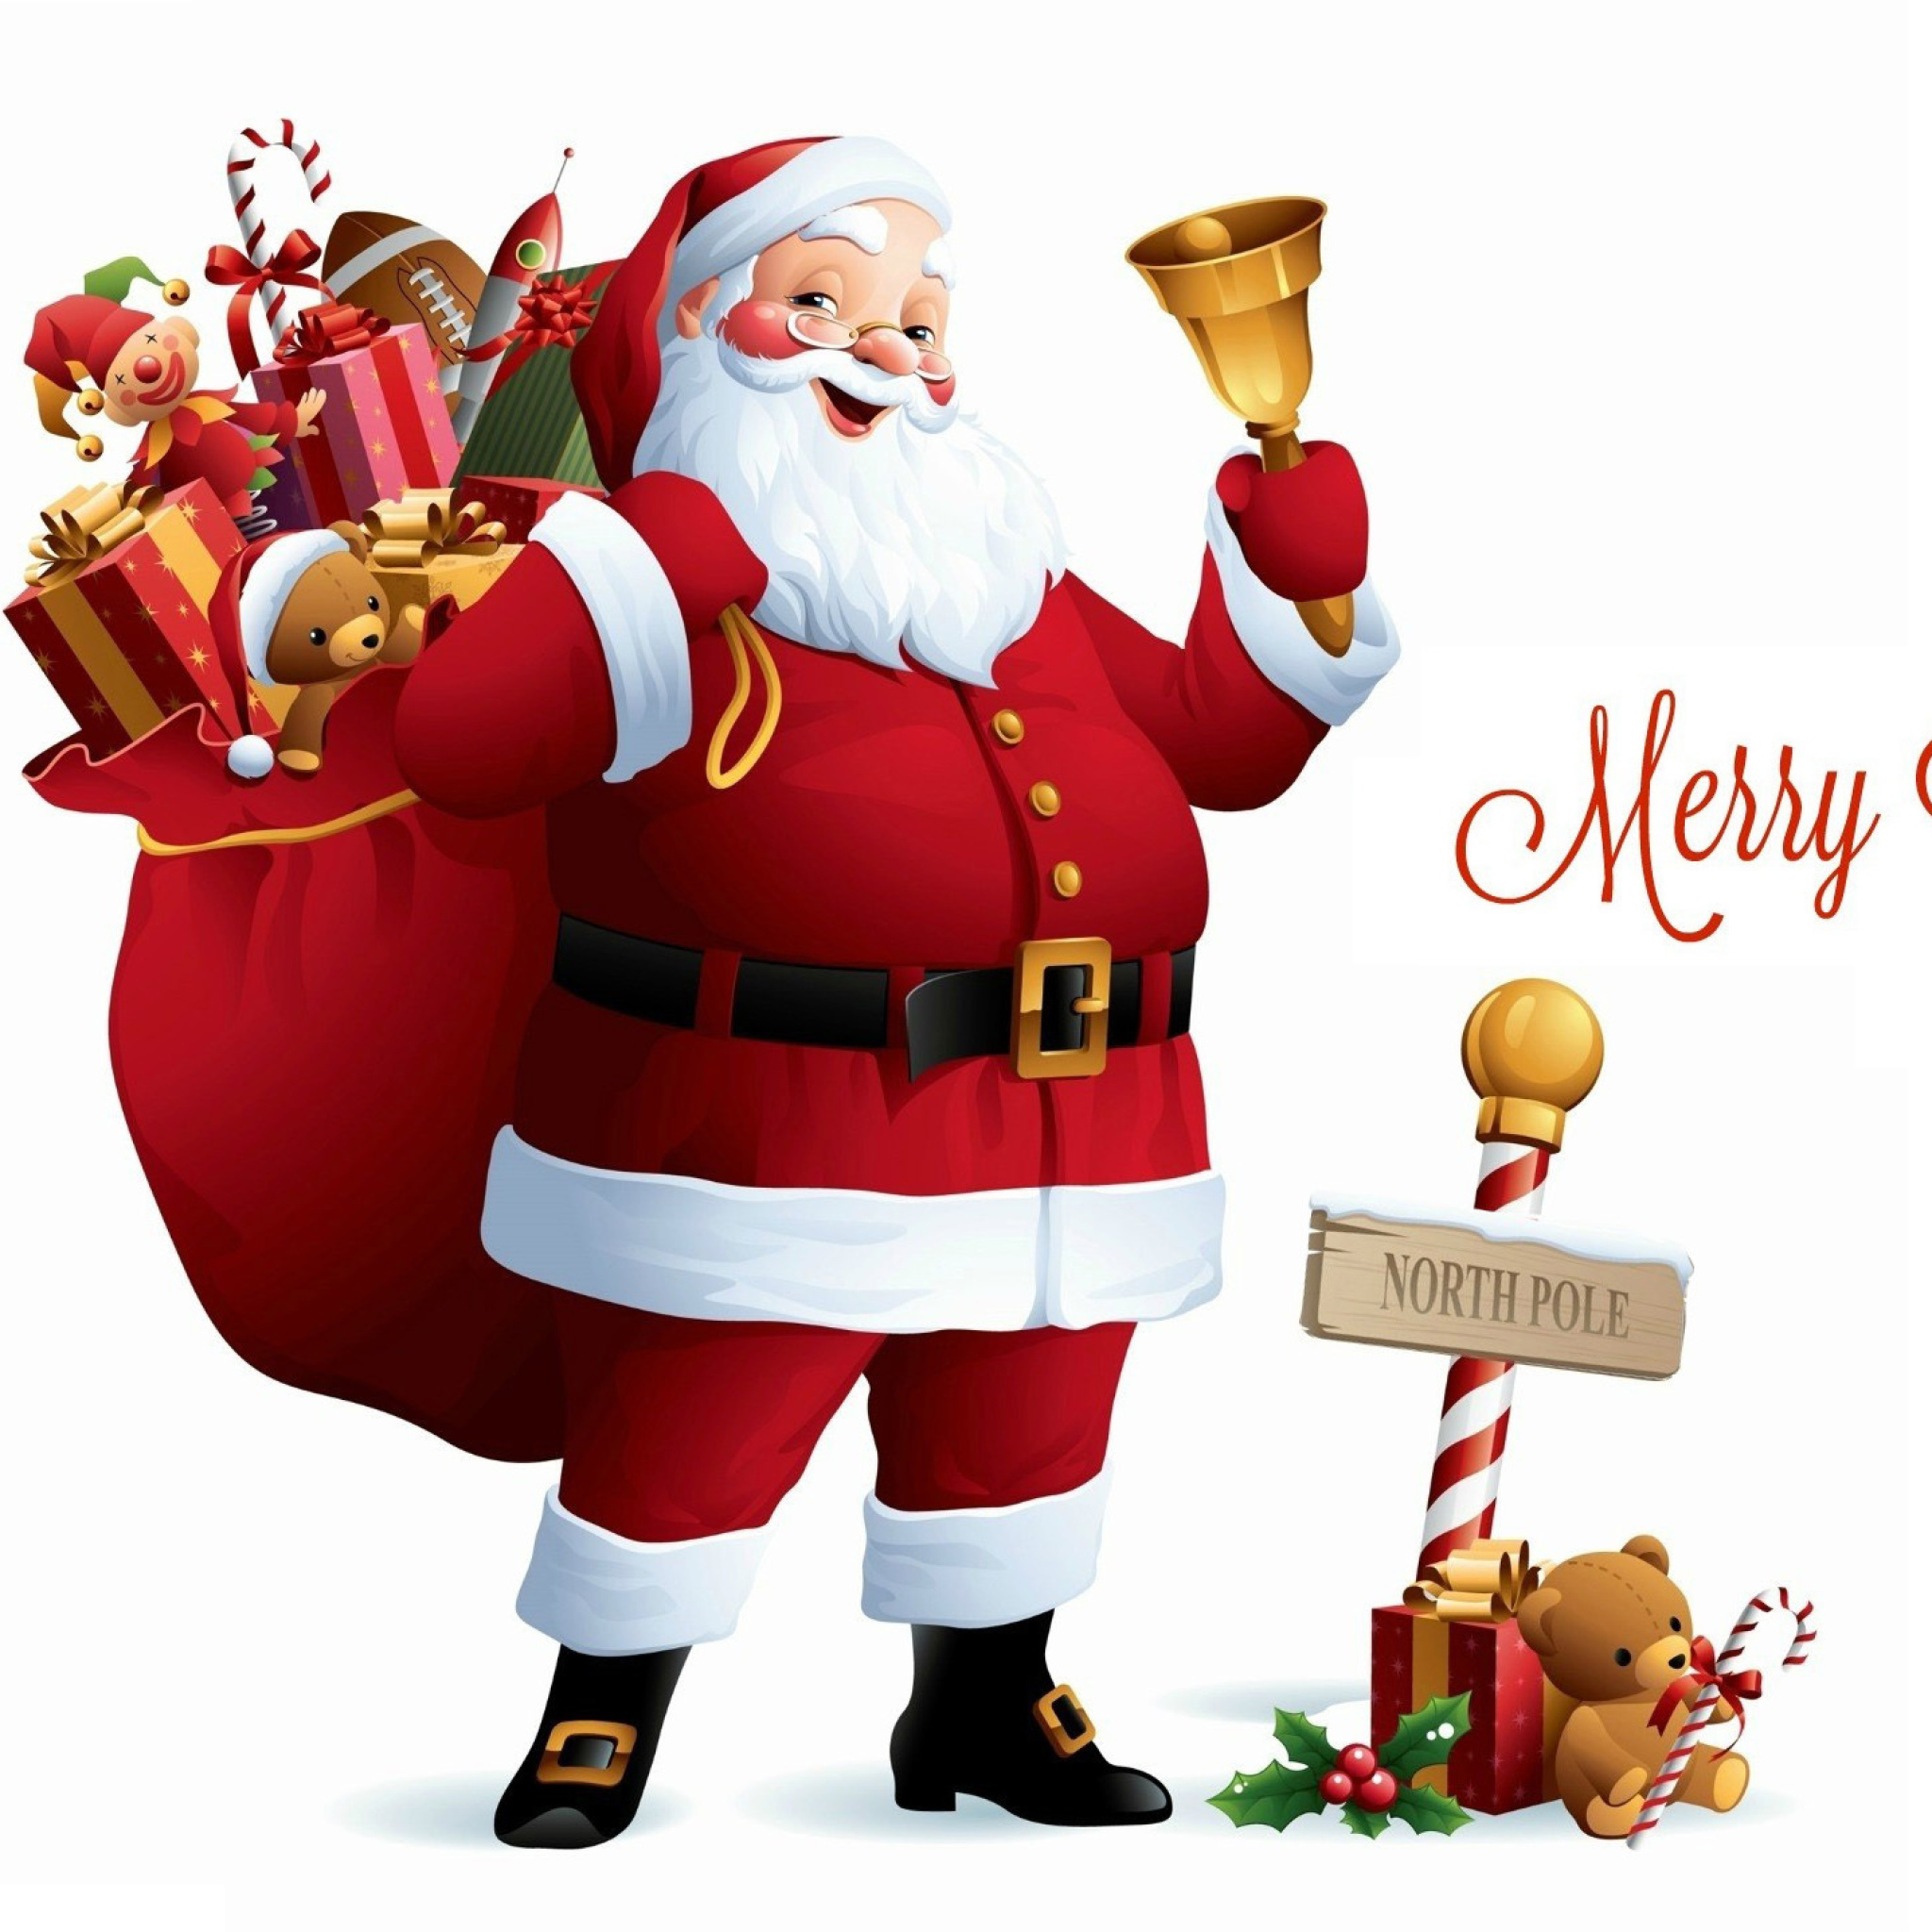 Das HO HO HO Merry Christmas Santa Claus Wallpaper 2048x2048